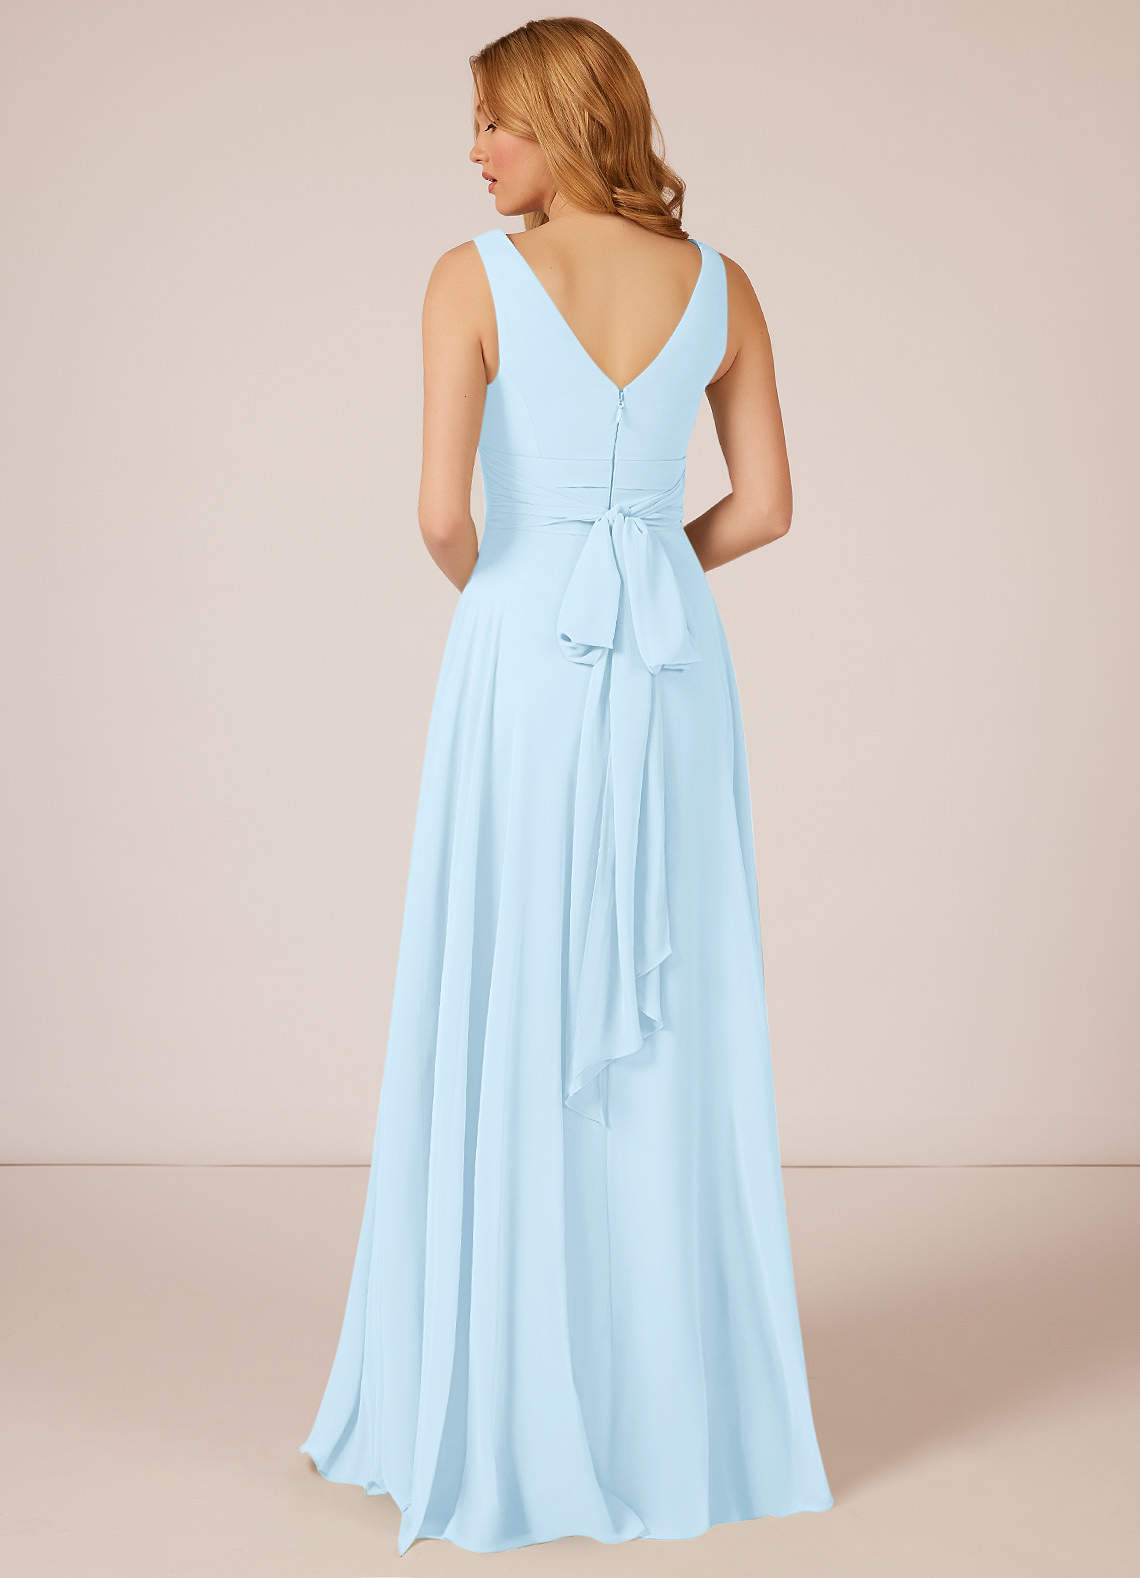 Azazie Bianca Bridesmaid Dresses A-Line Pleated Chiffon Floor-Length Dress image1